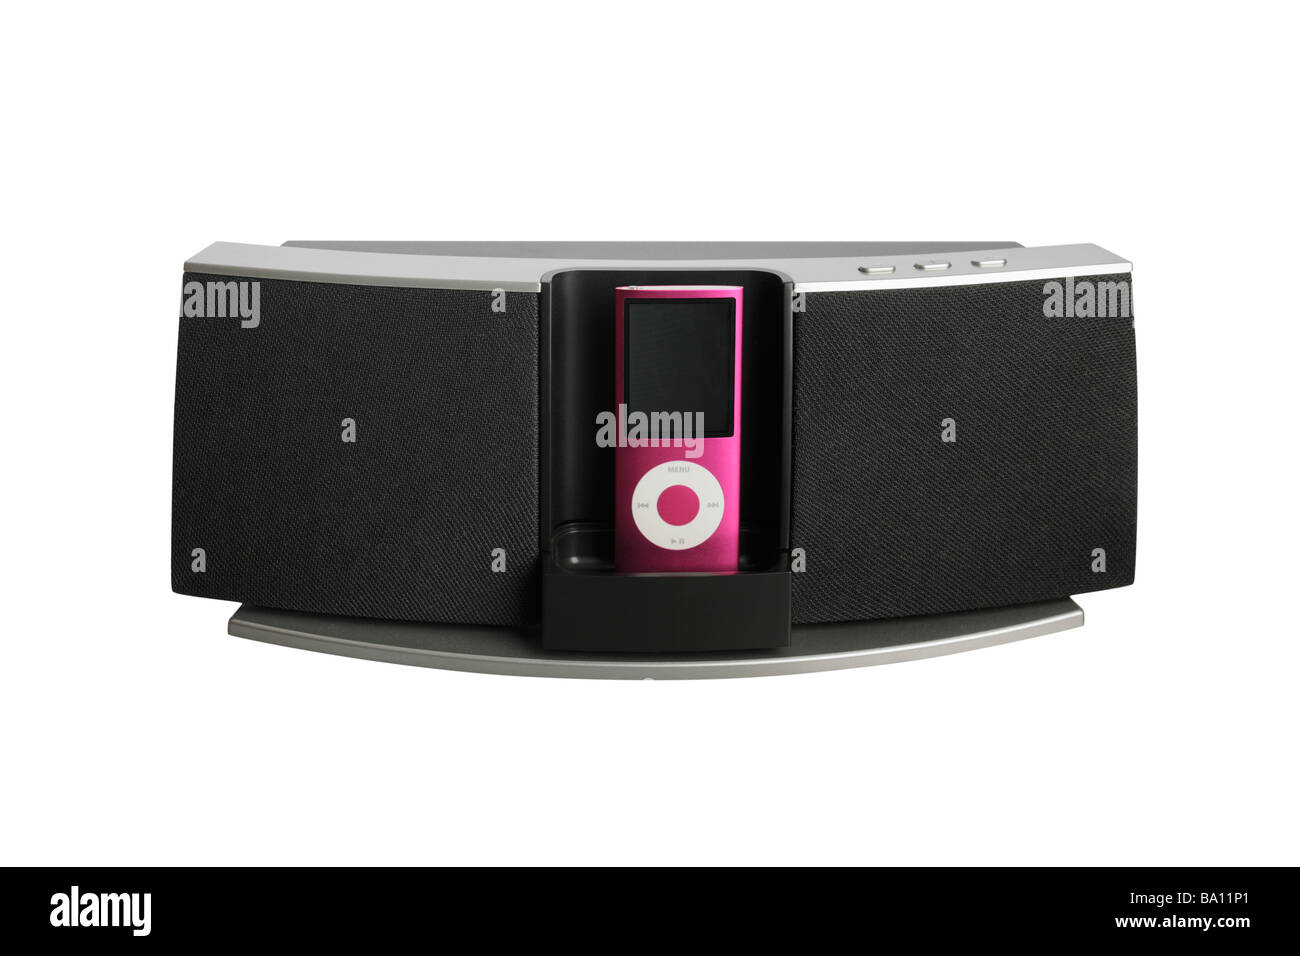 Pink Apple Ipod speaker dock system Stock Photo - Alamy